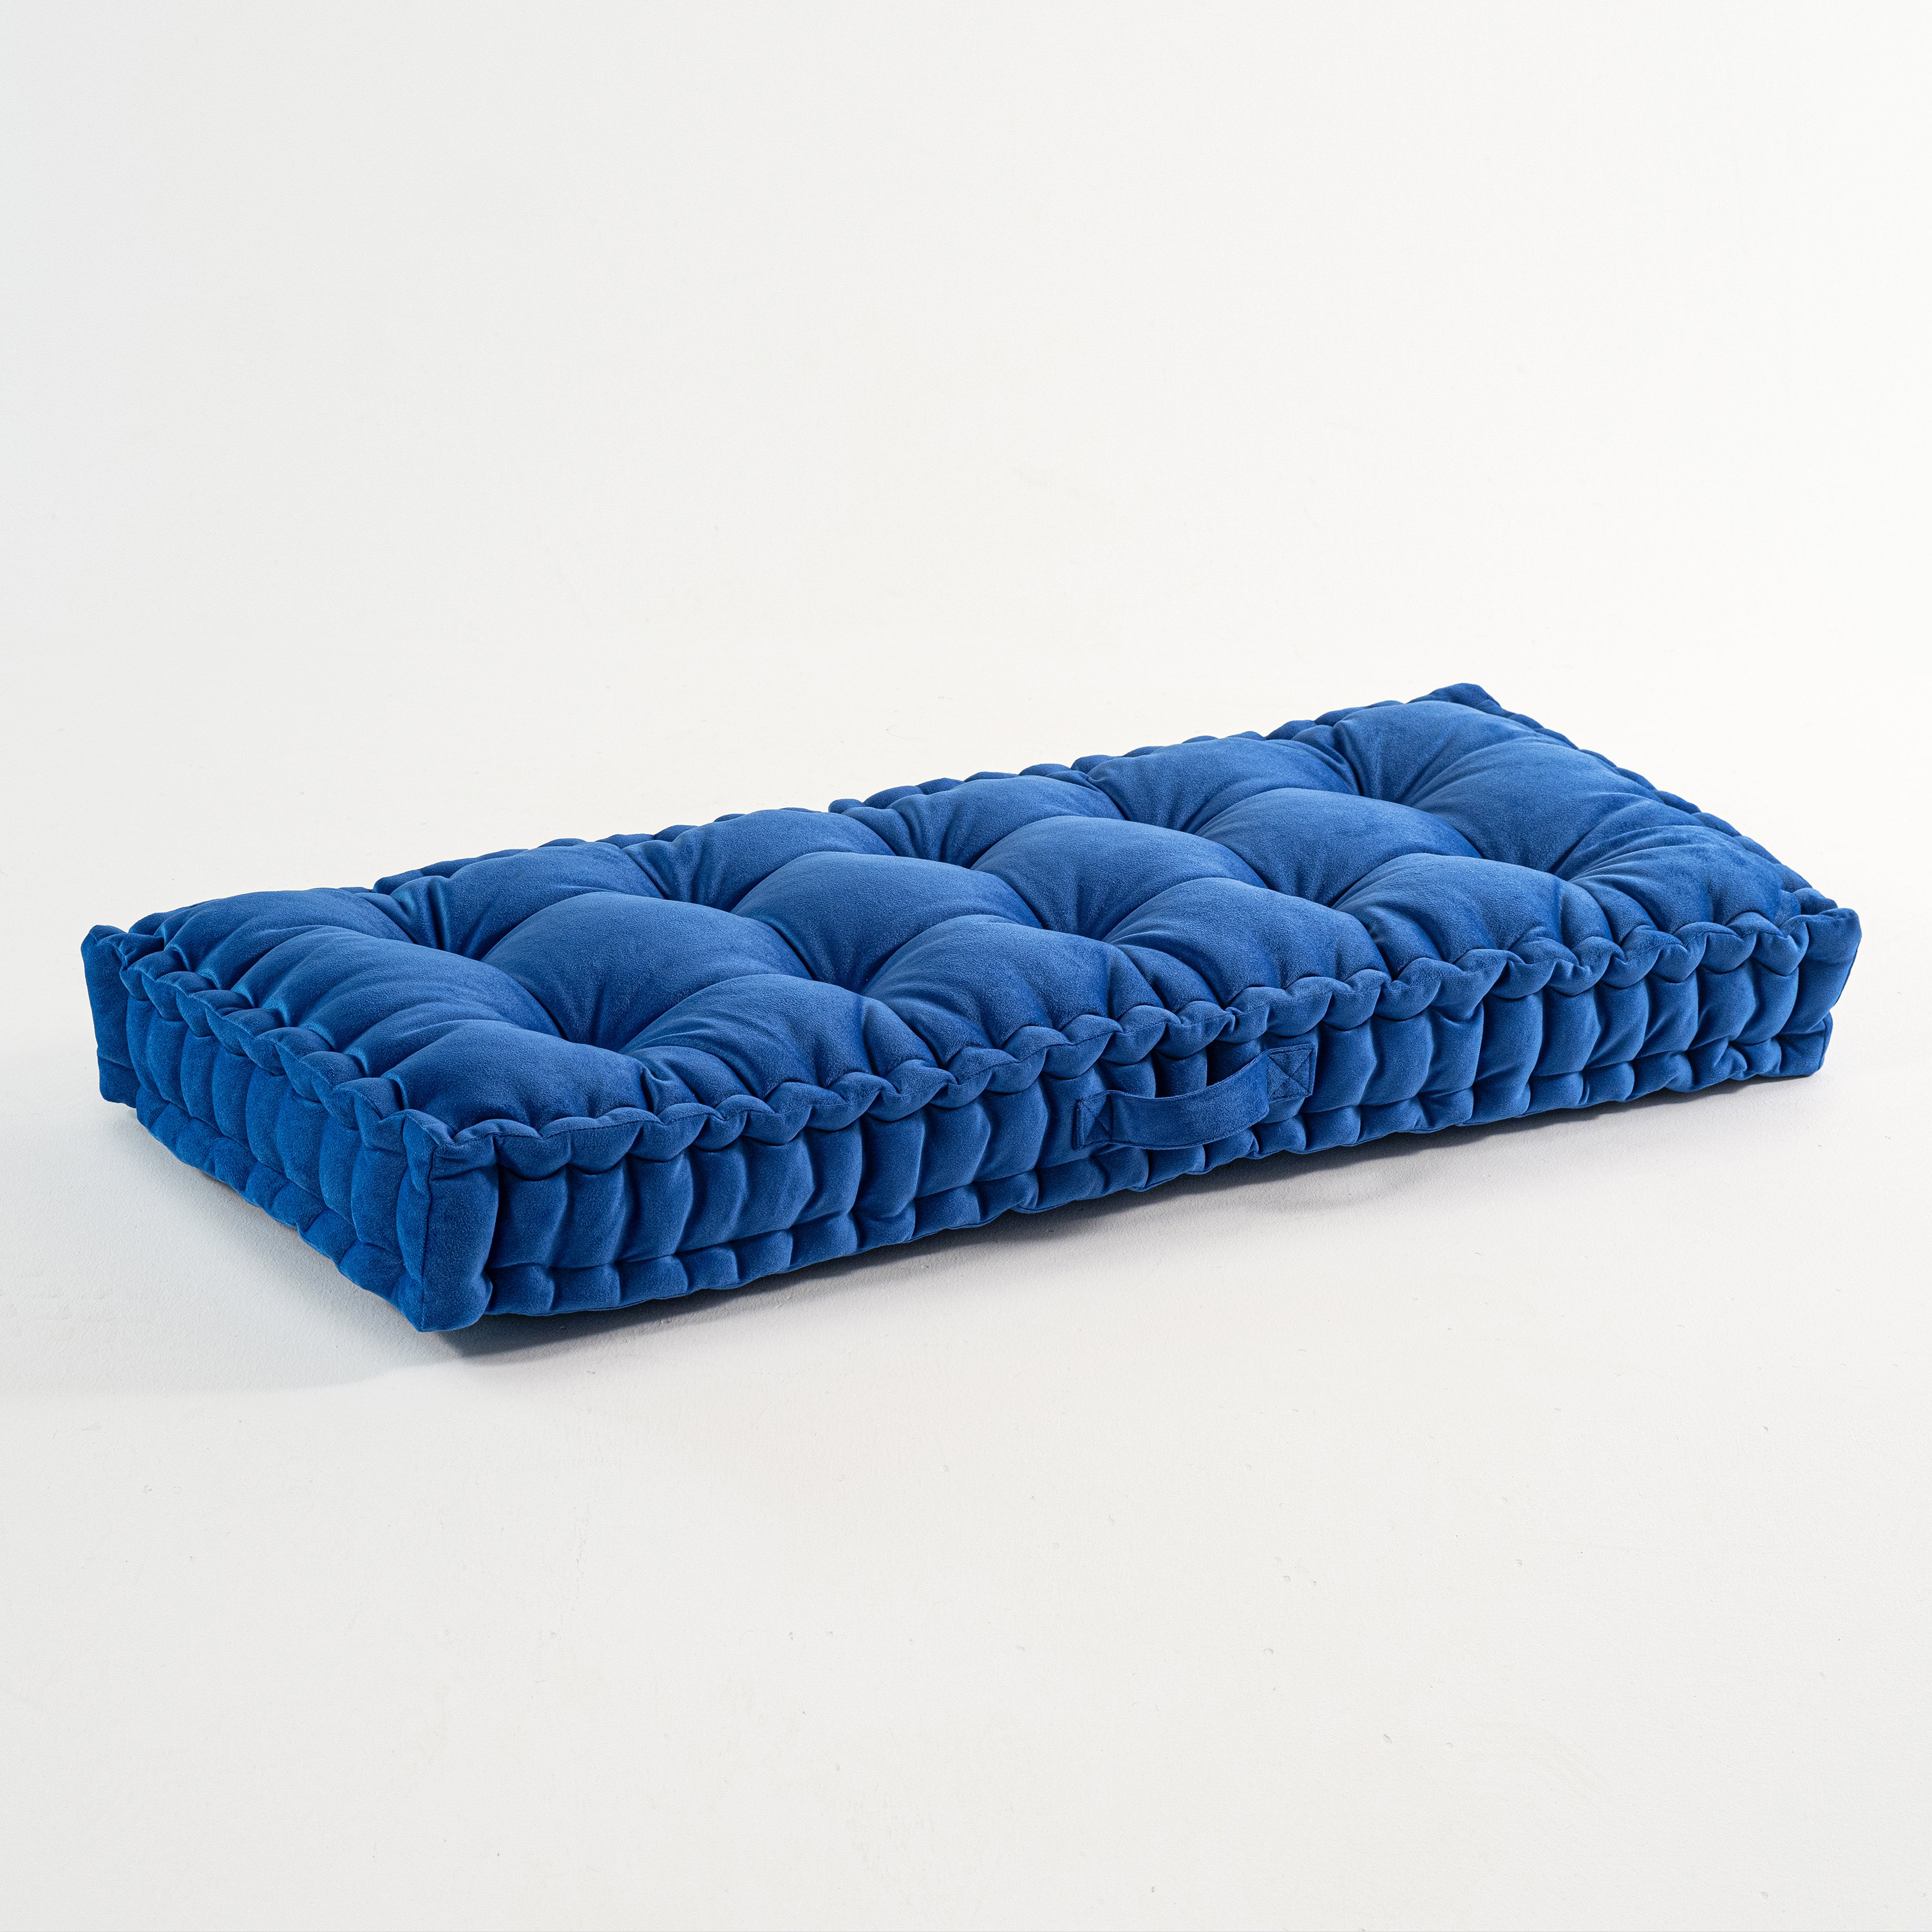 60-inch by 19-inch Micro Suede Bench Cushion - Aqua Blue